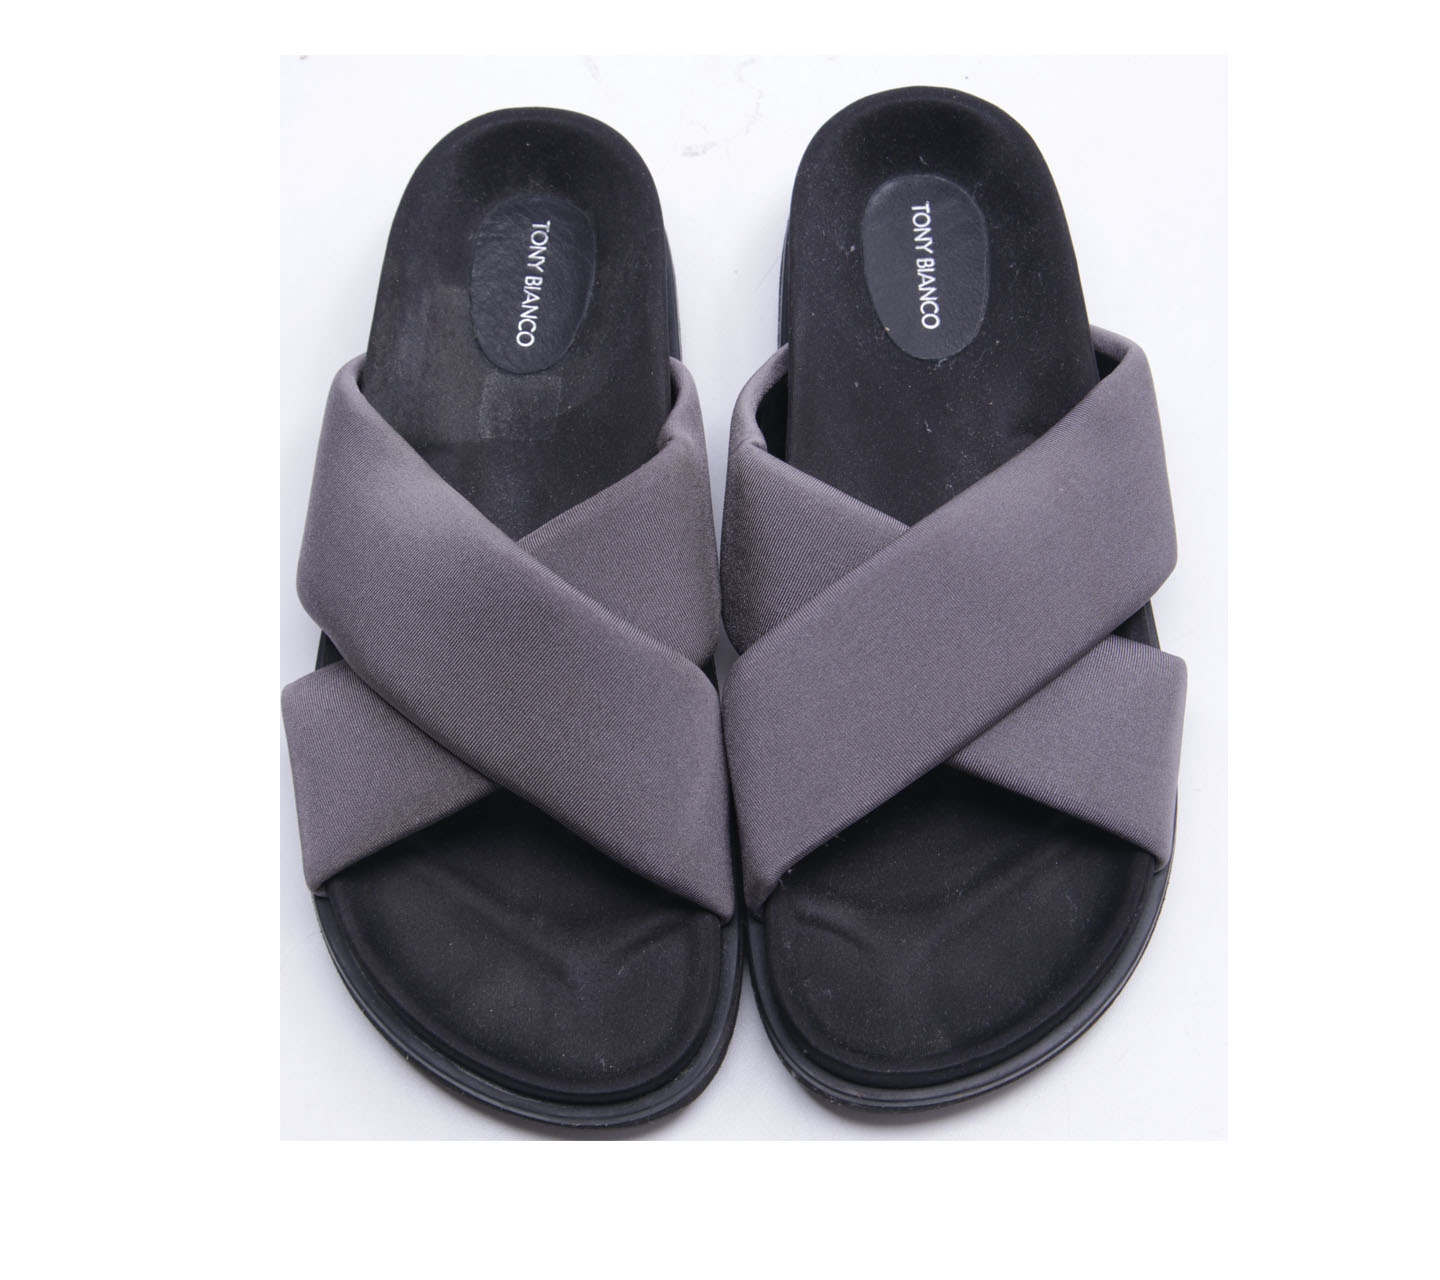 Tony Bianco Black & Grey Sandals